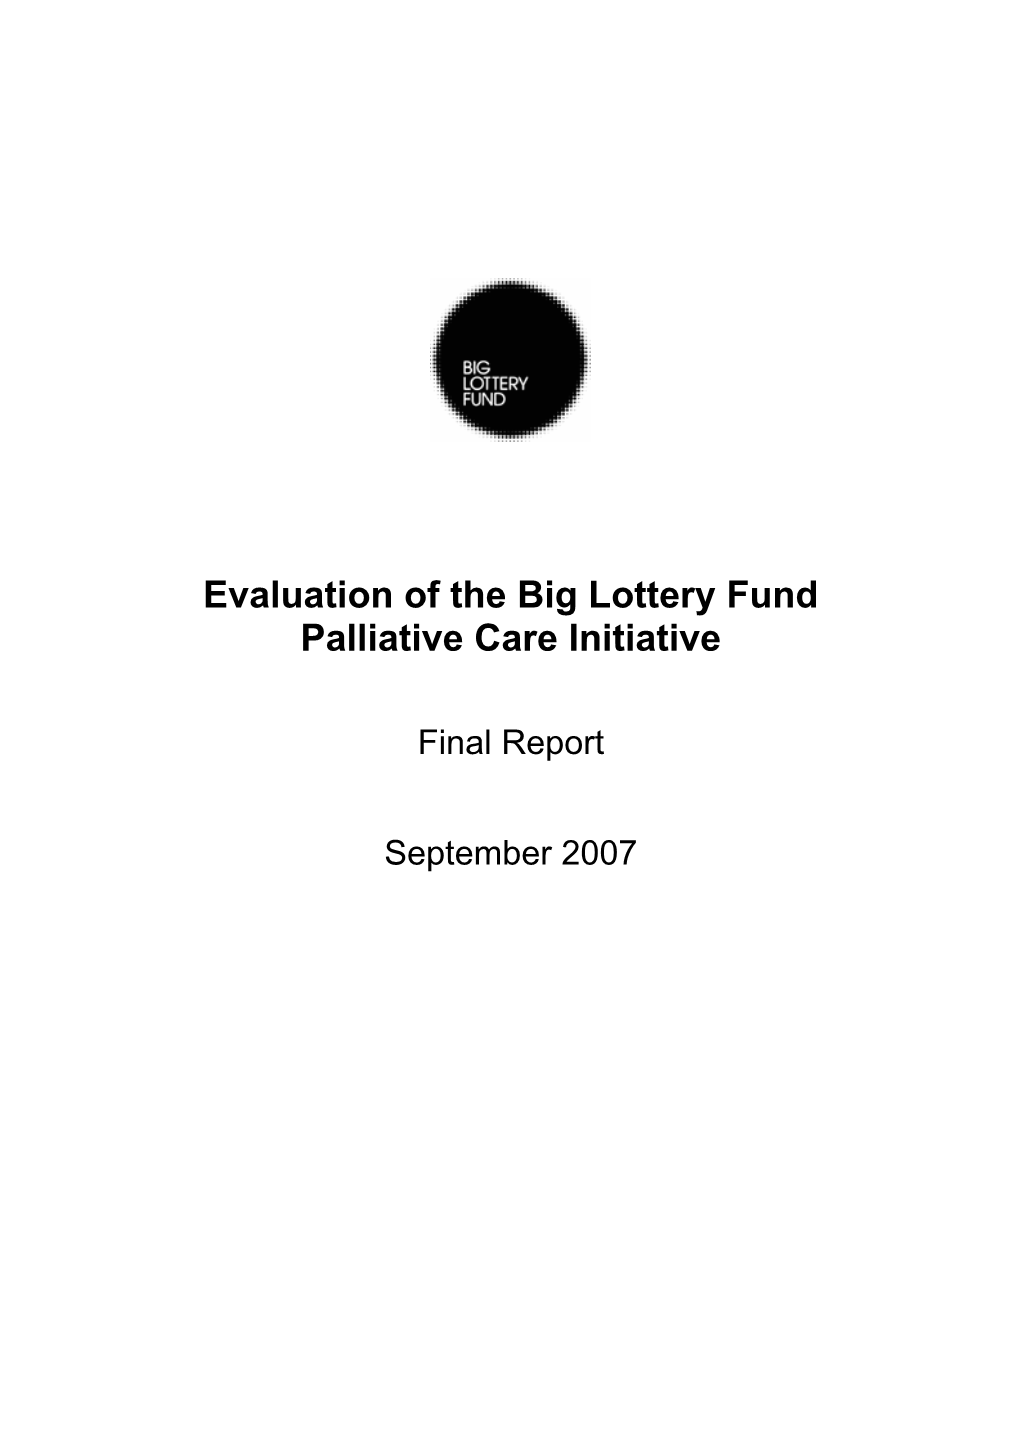 Evaluation of the Big Lottery Fund Palliative Care Initiative